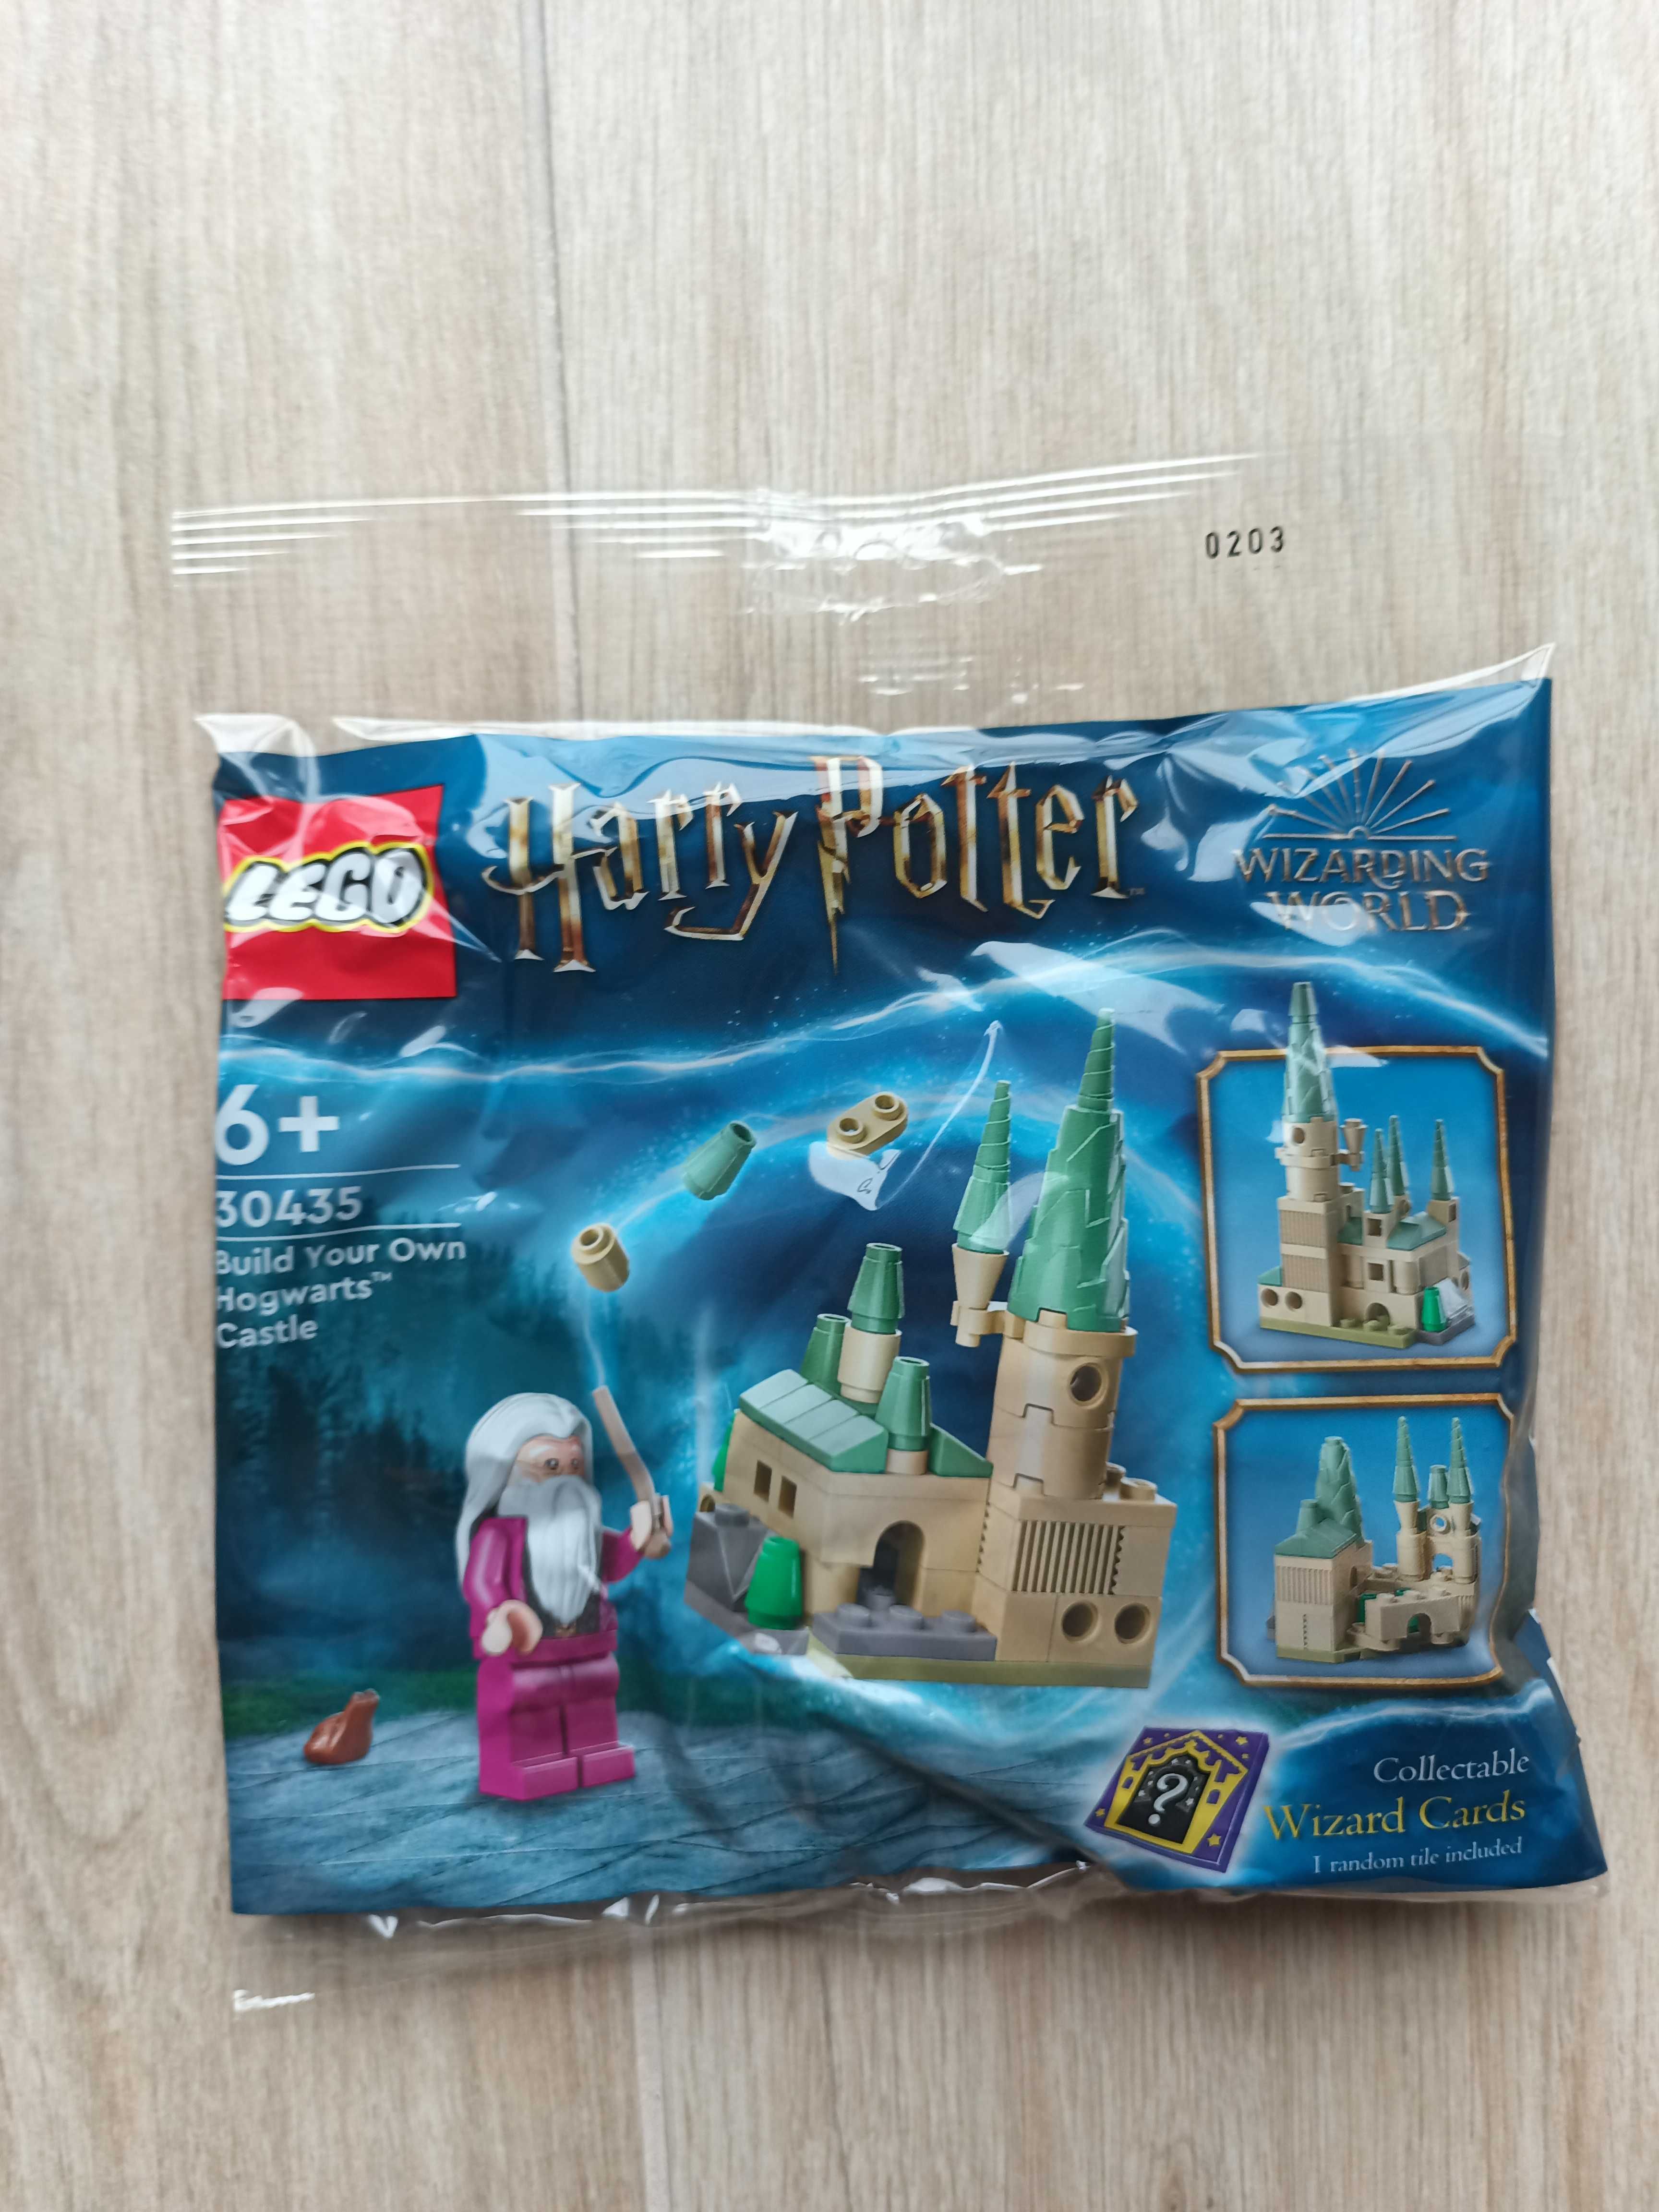 LEGO 30435 Harry potter